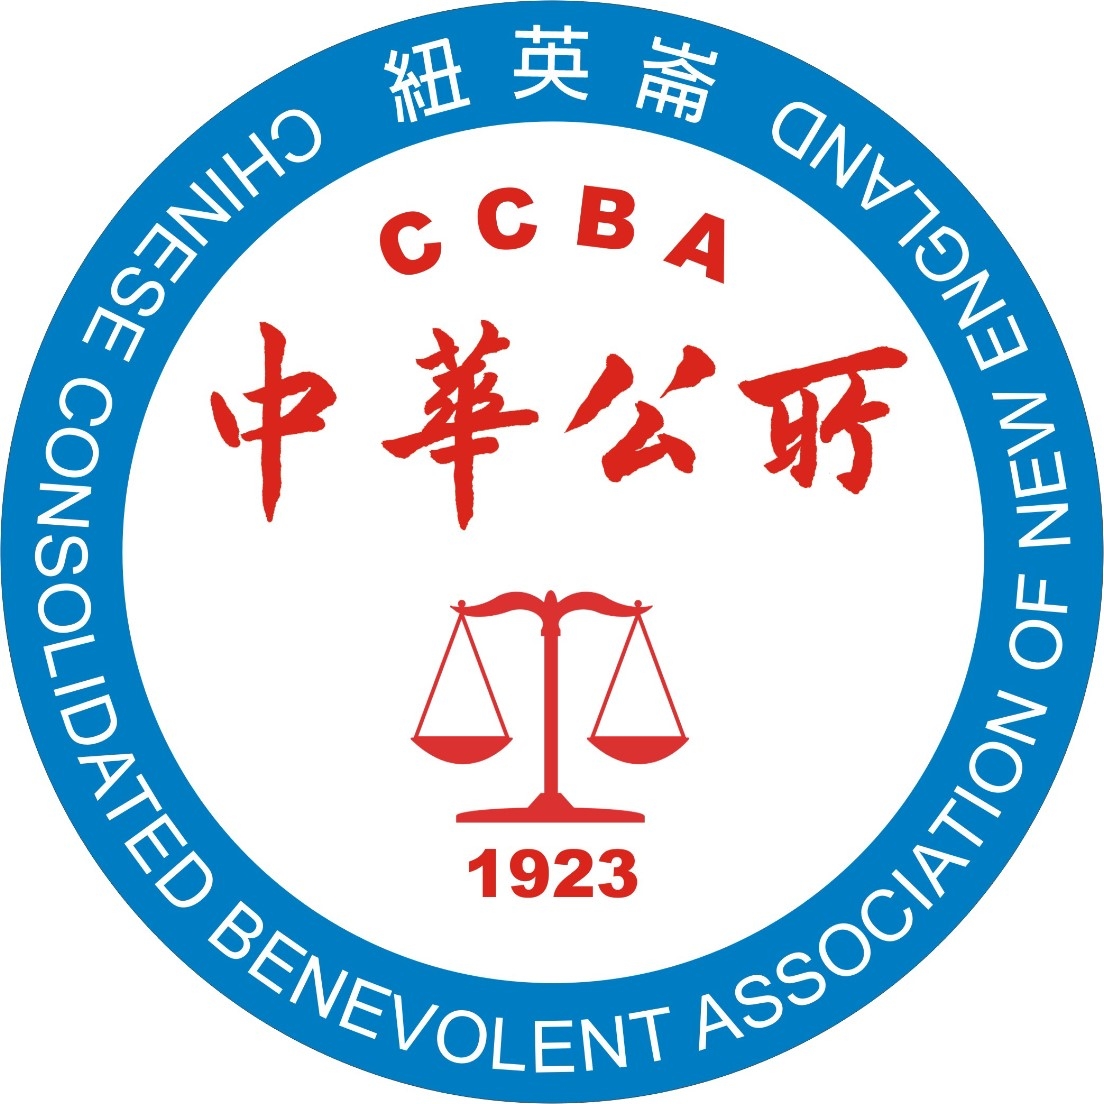 Mandarin Speaking Organizations in Massachusetts - Chinese Consolidated Benevolent Association of New England